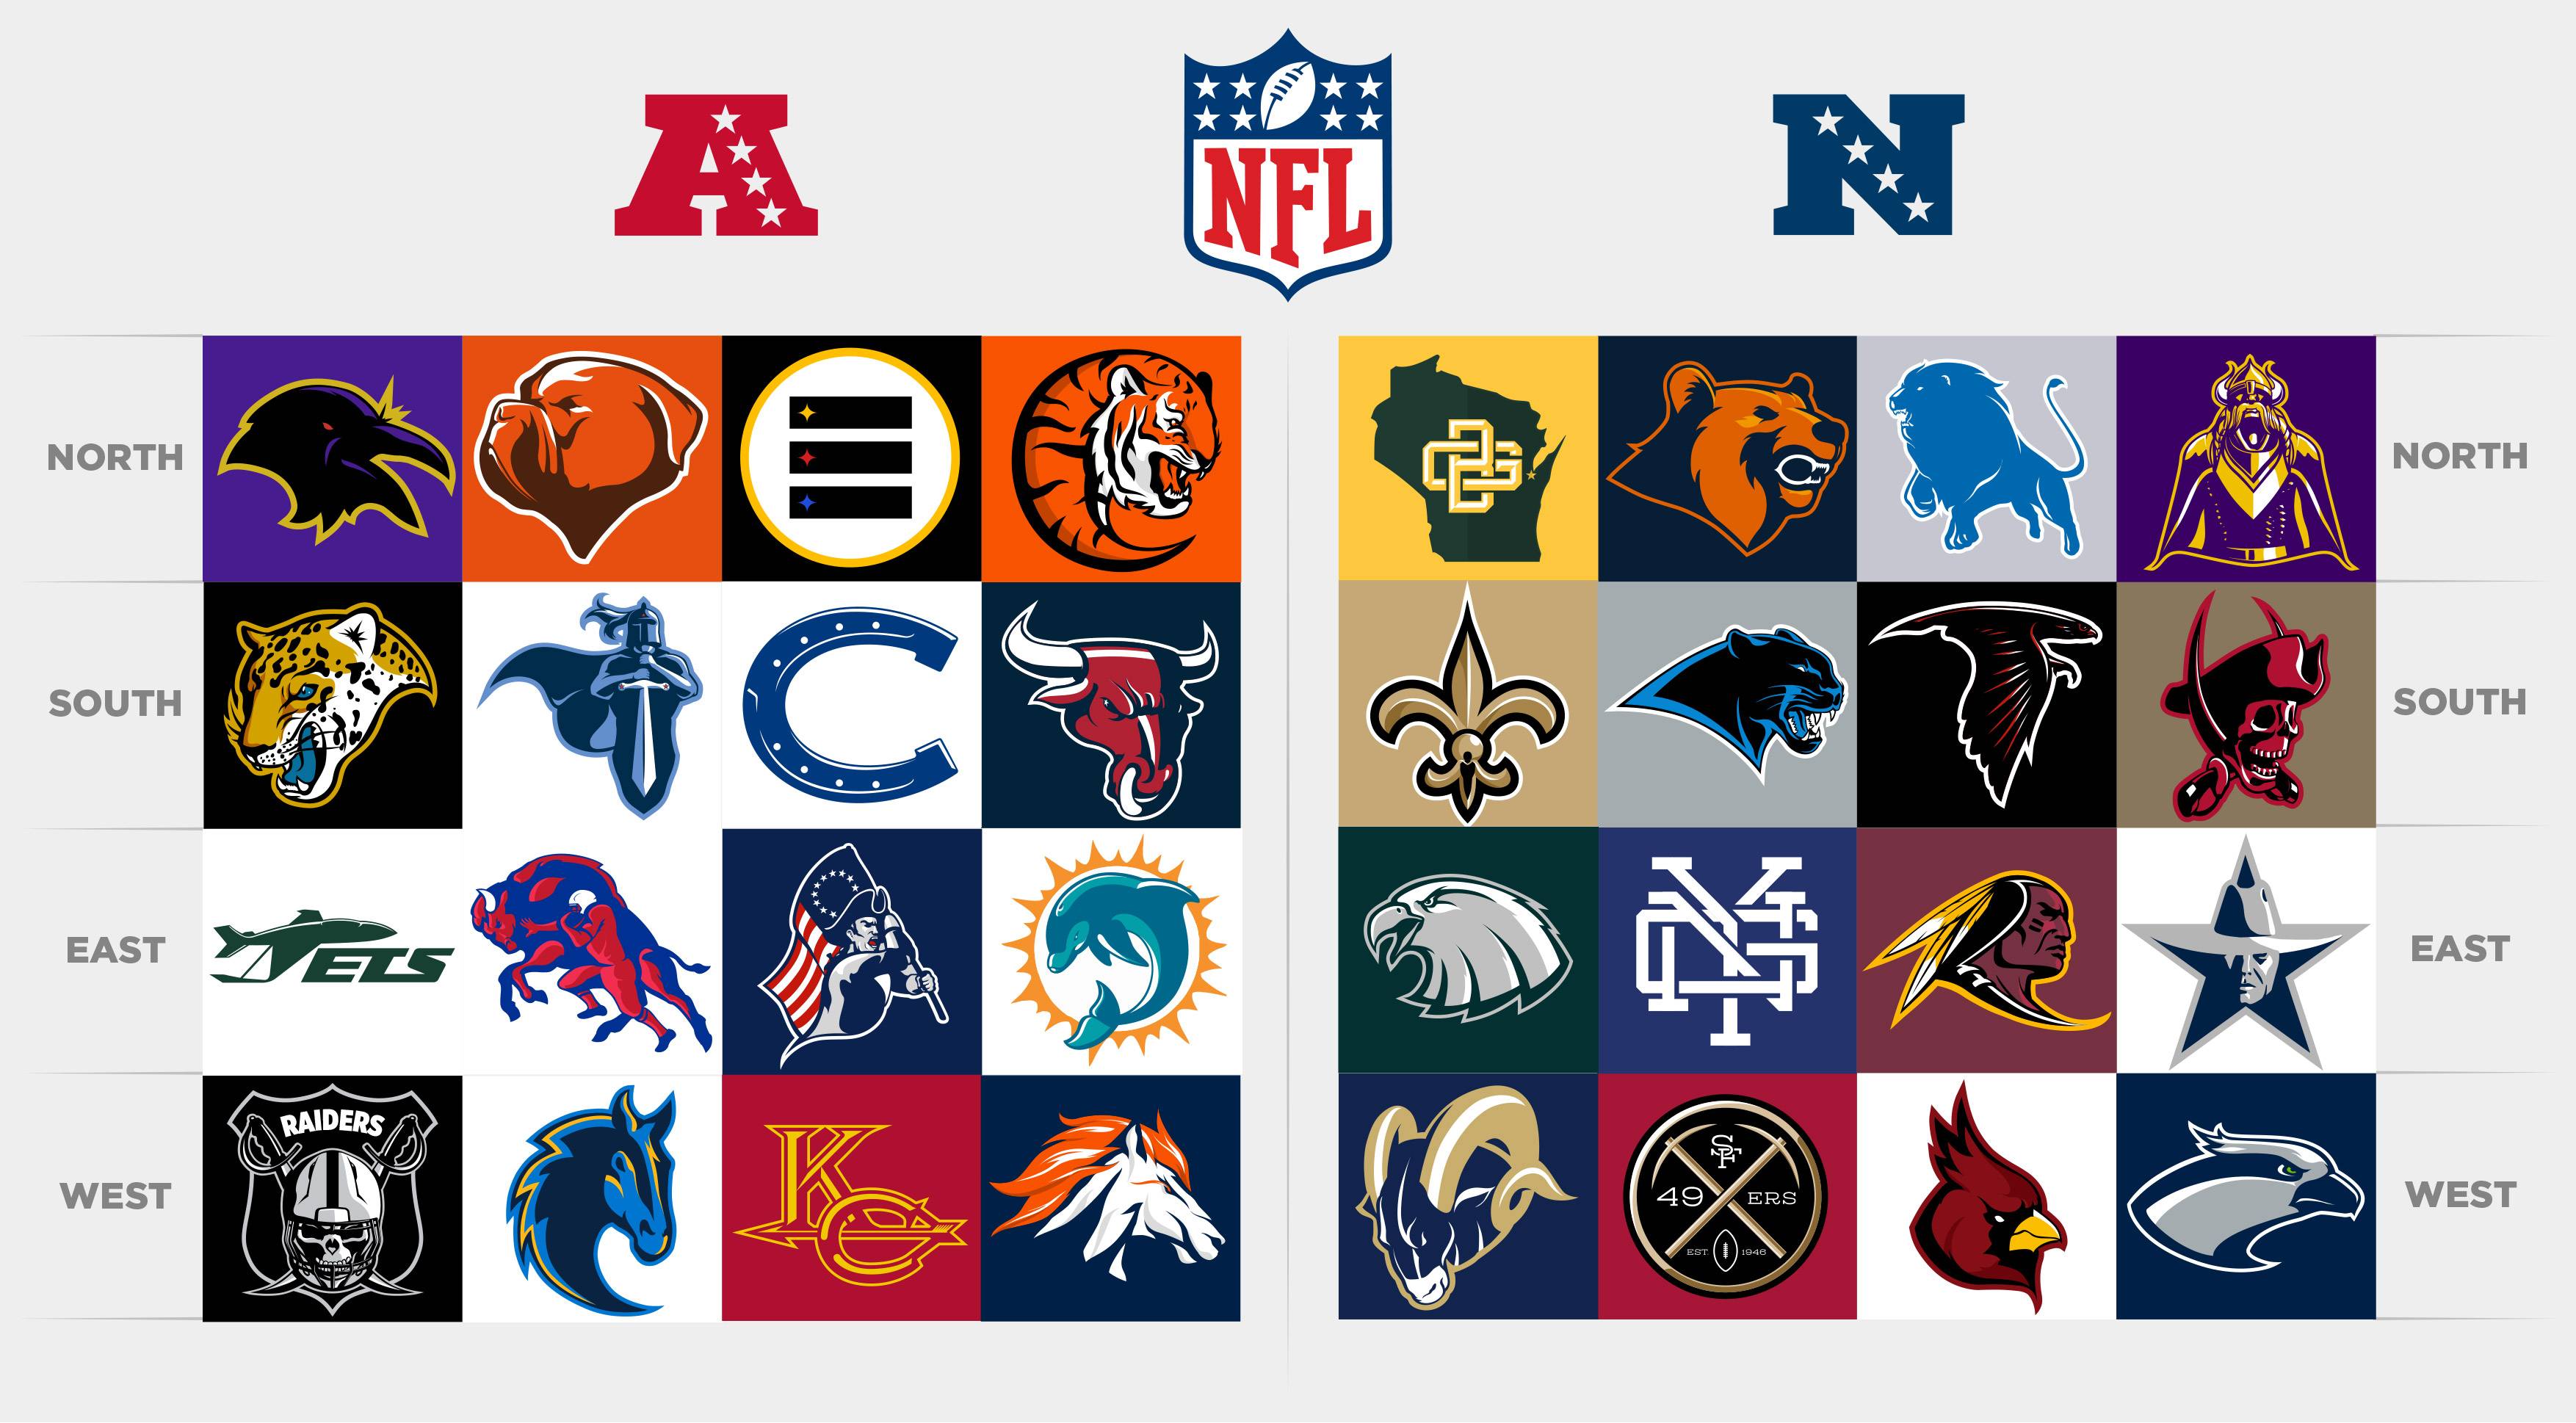 NFL Logo Teams wallpaper HD 2016 in Football